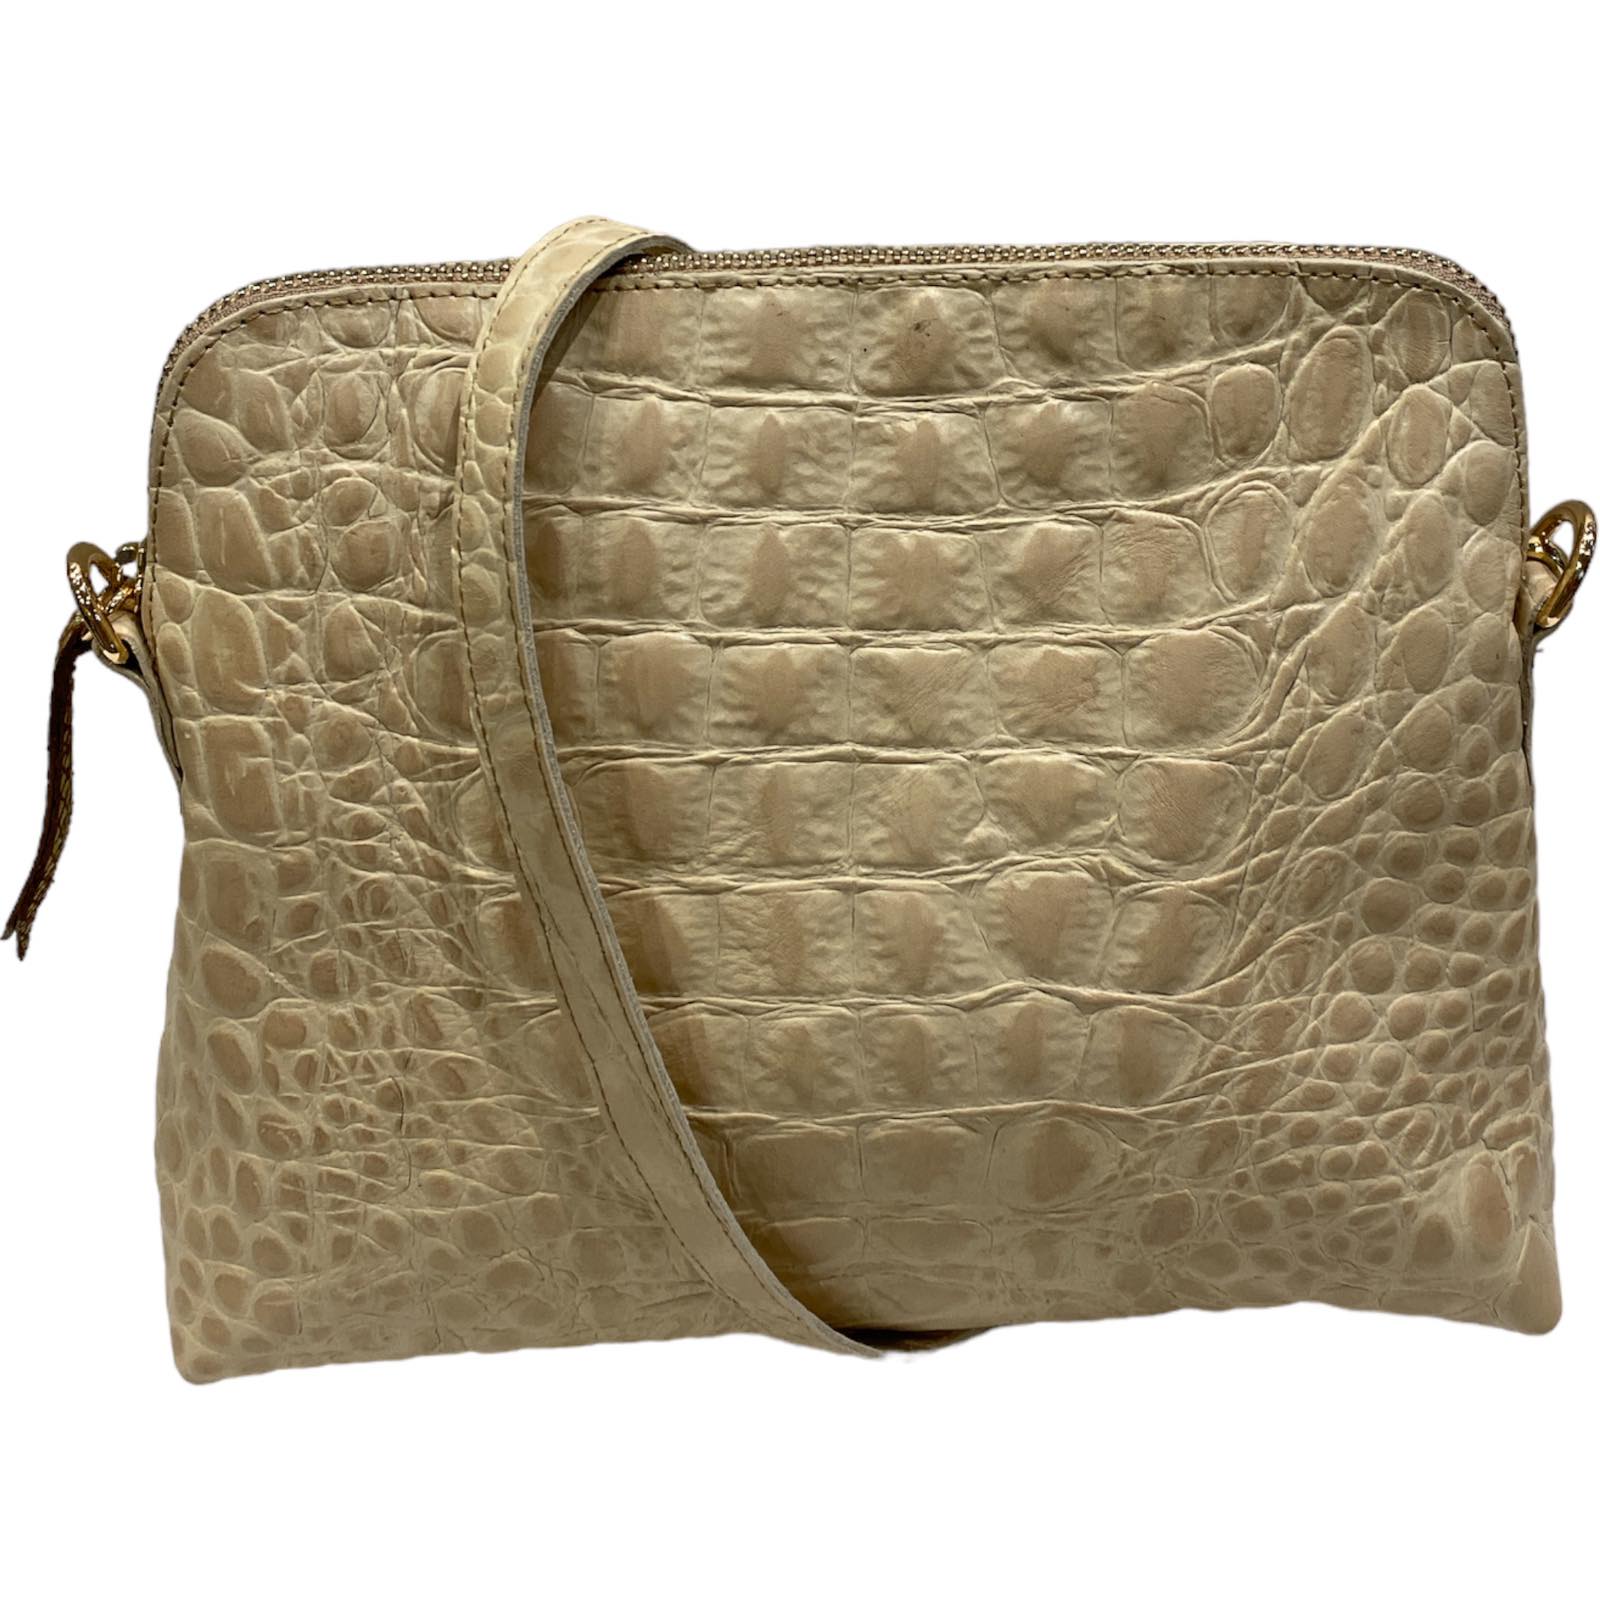 Box XXL. Beige alligator-print leather messenger bag